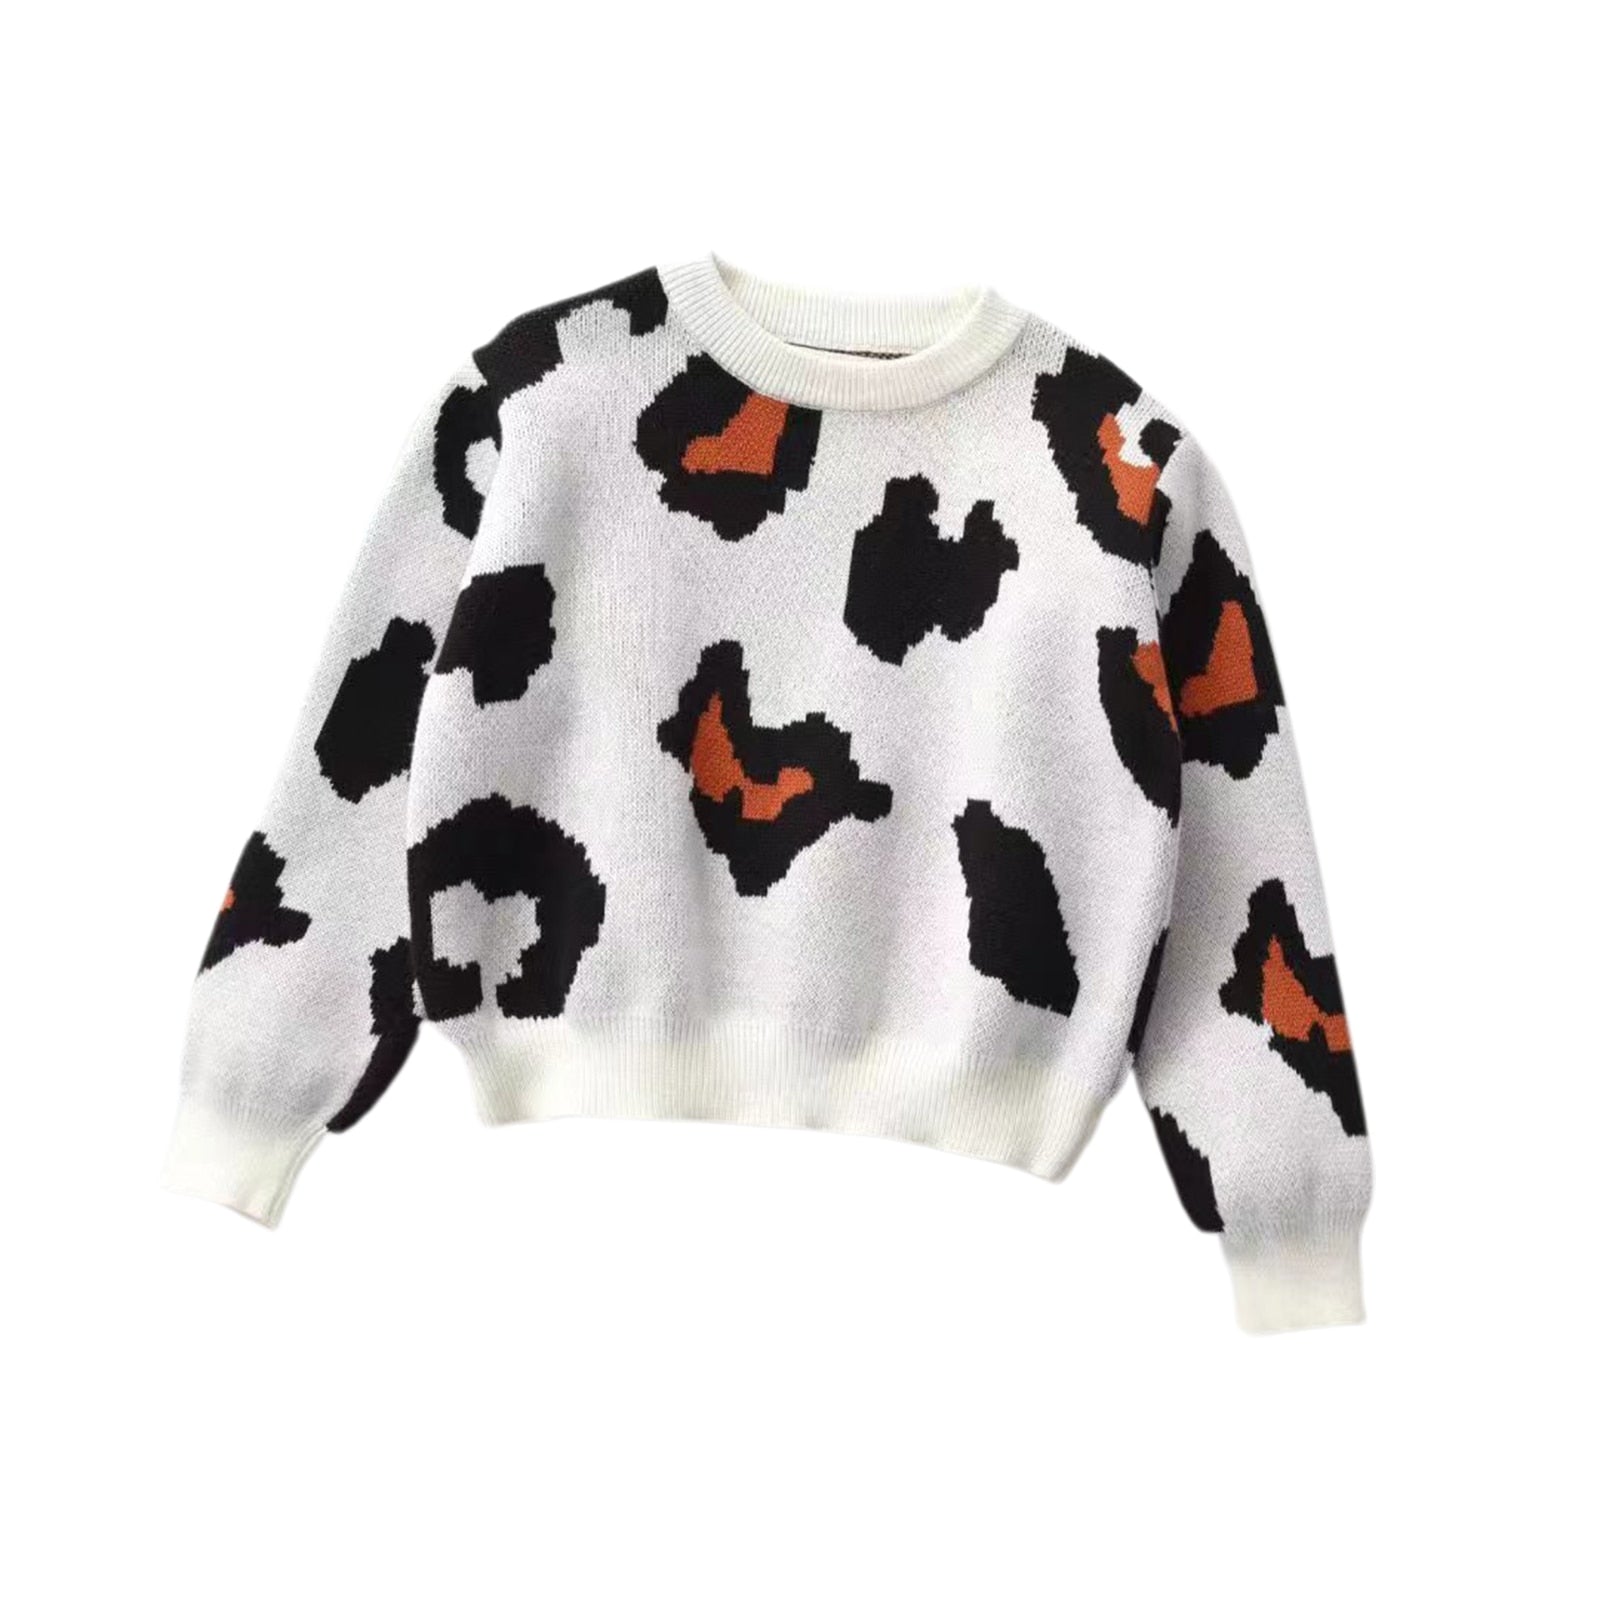 Toddler Girls Long Sleeve Leopard Print Sweater